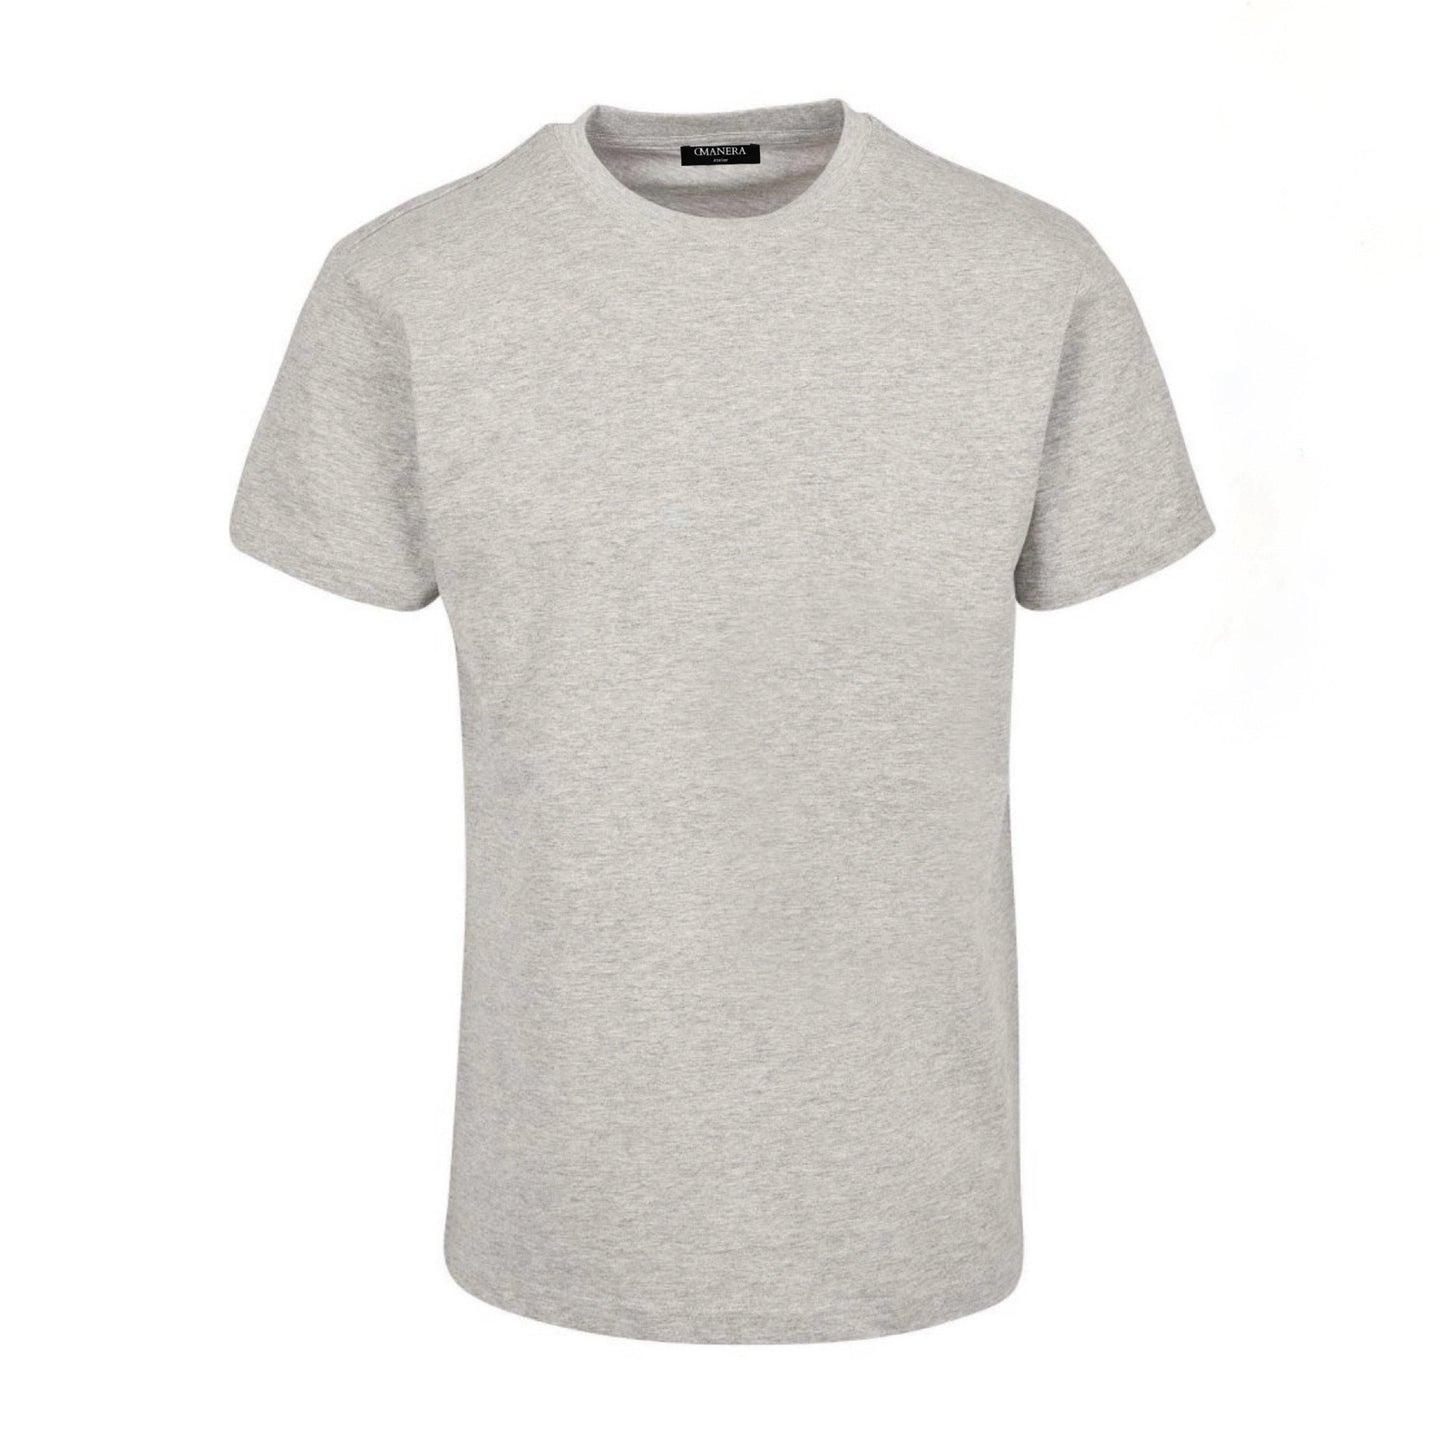 Premium Basic Shirt Grey 190 g/m² - DMANERA Atelier